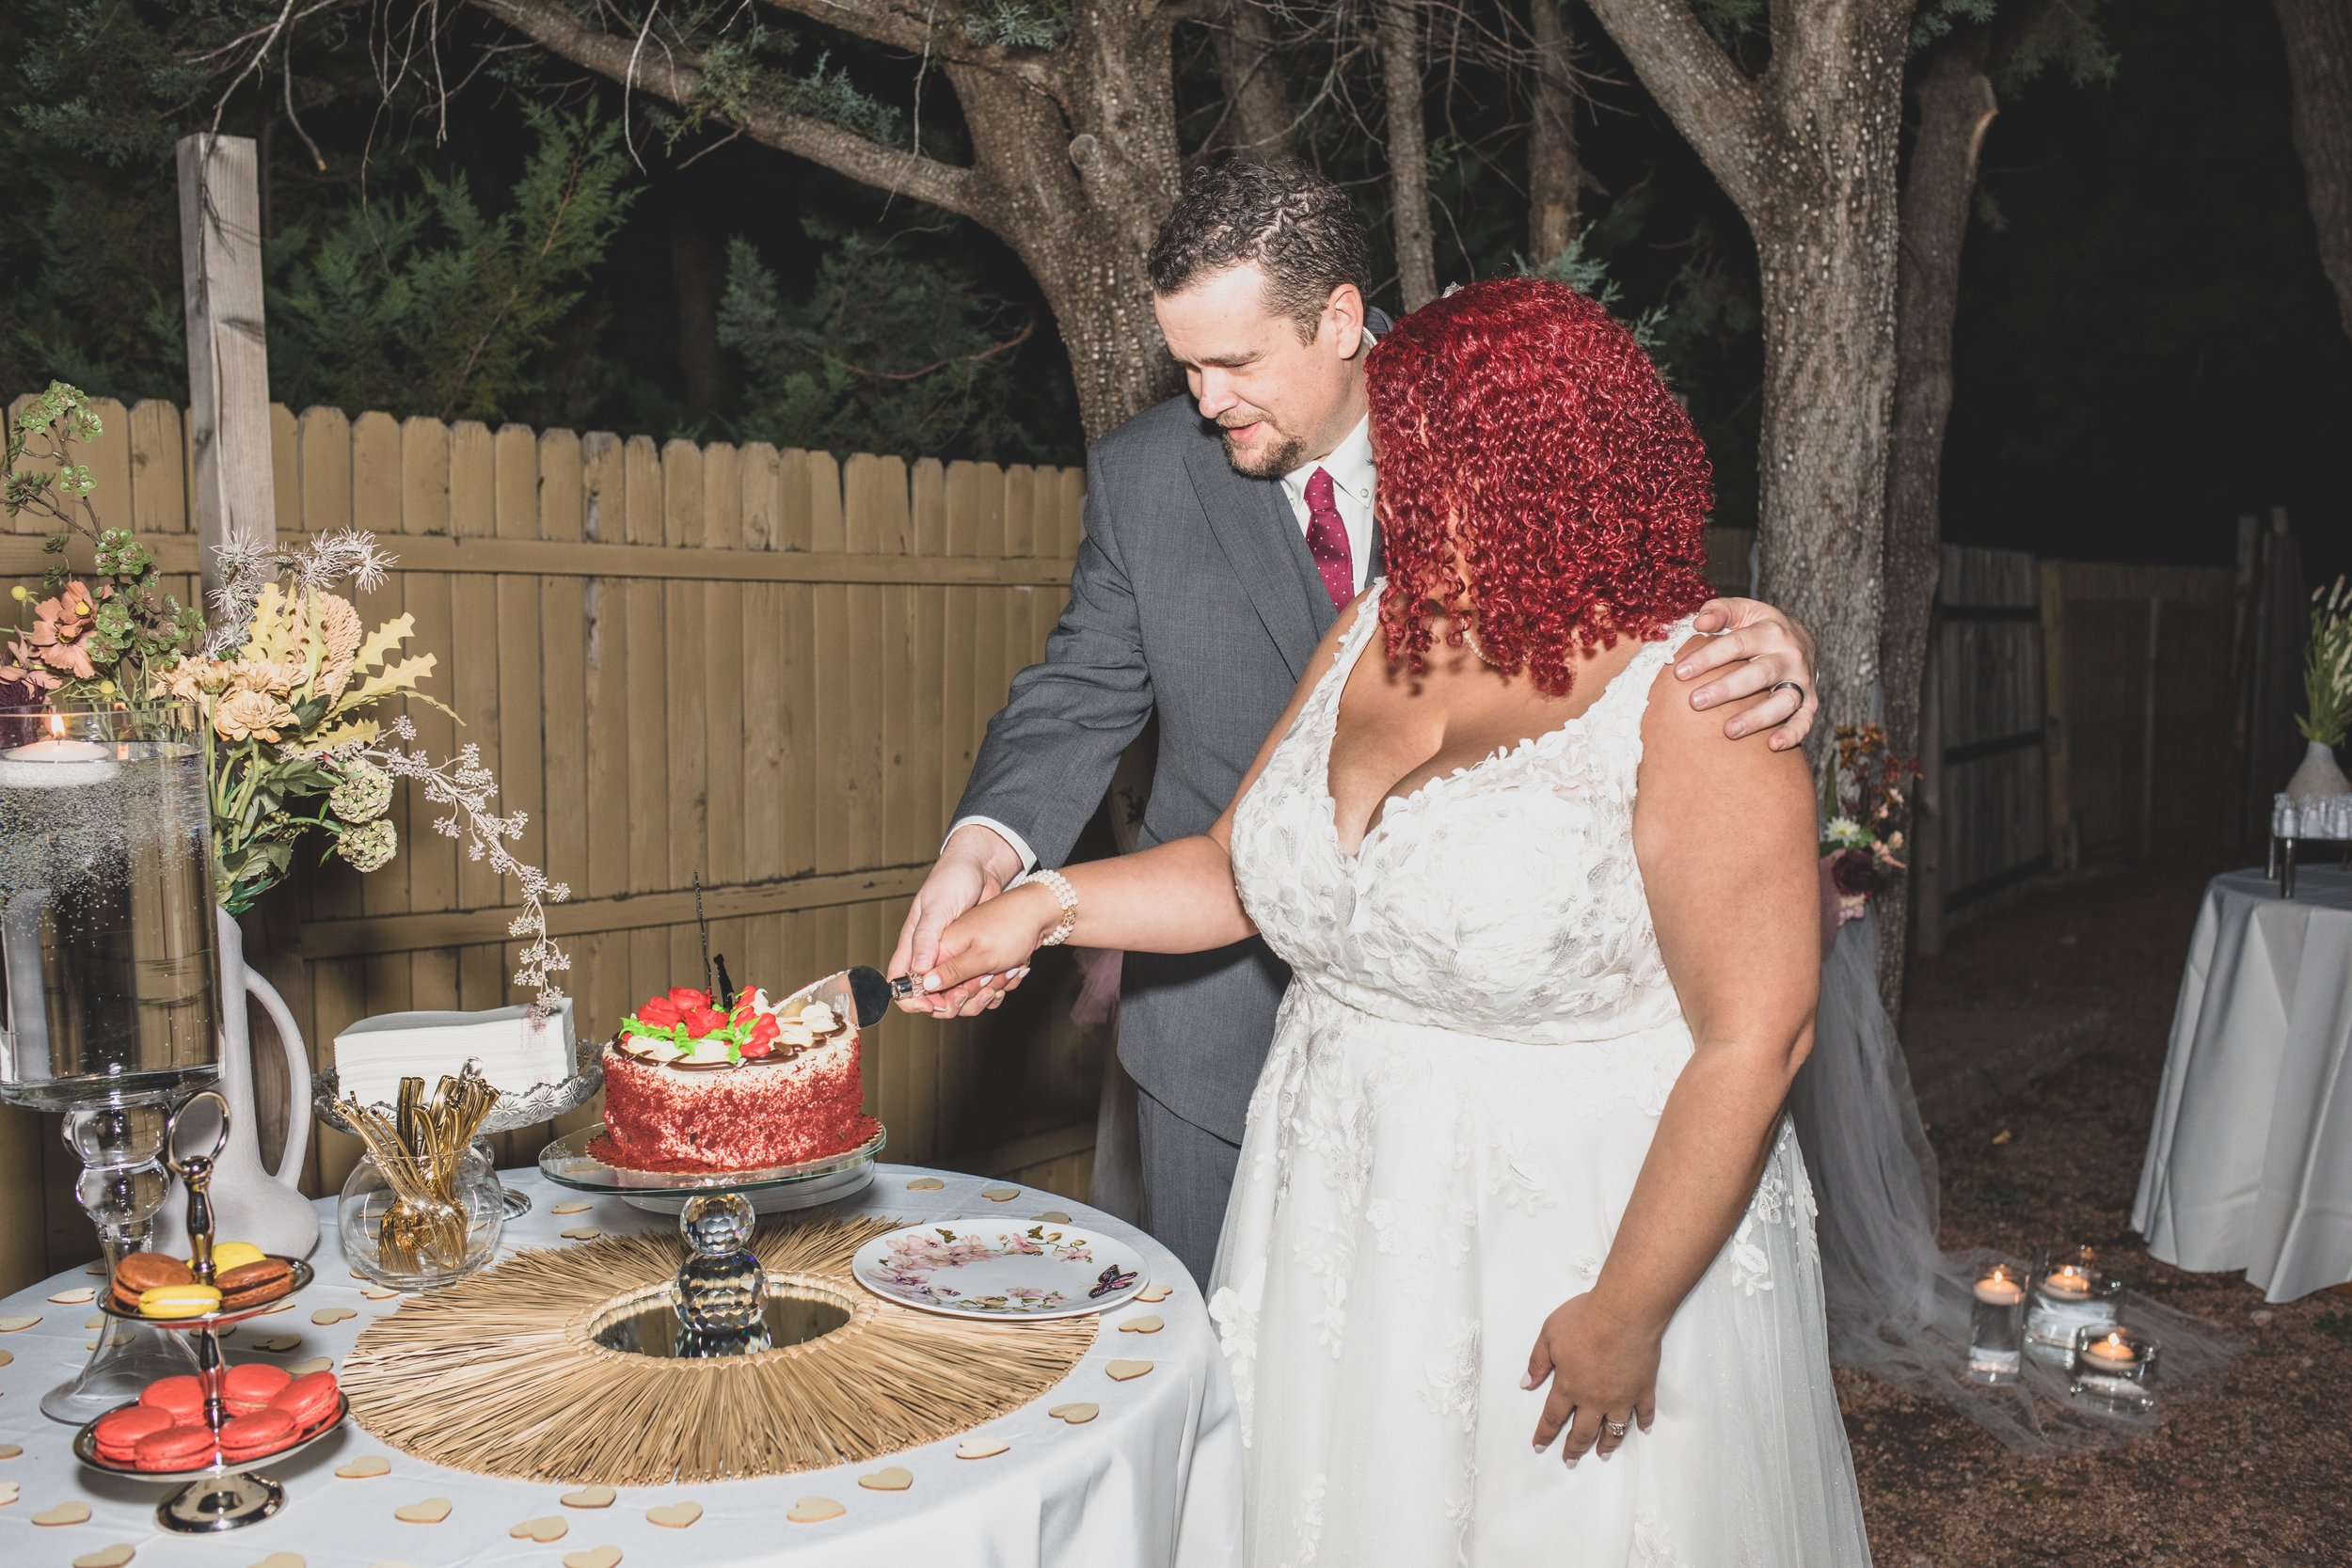  Couple cutting the cake at Northern Arizona Rim Micro Wedding by  Arizona Elopement Photographer Jennifer Lind Schutsky 